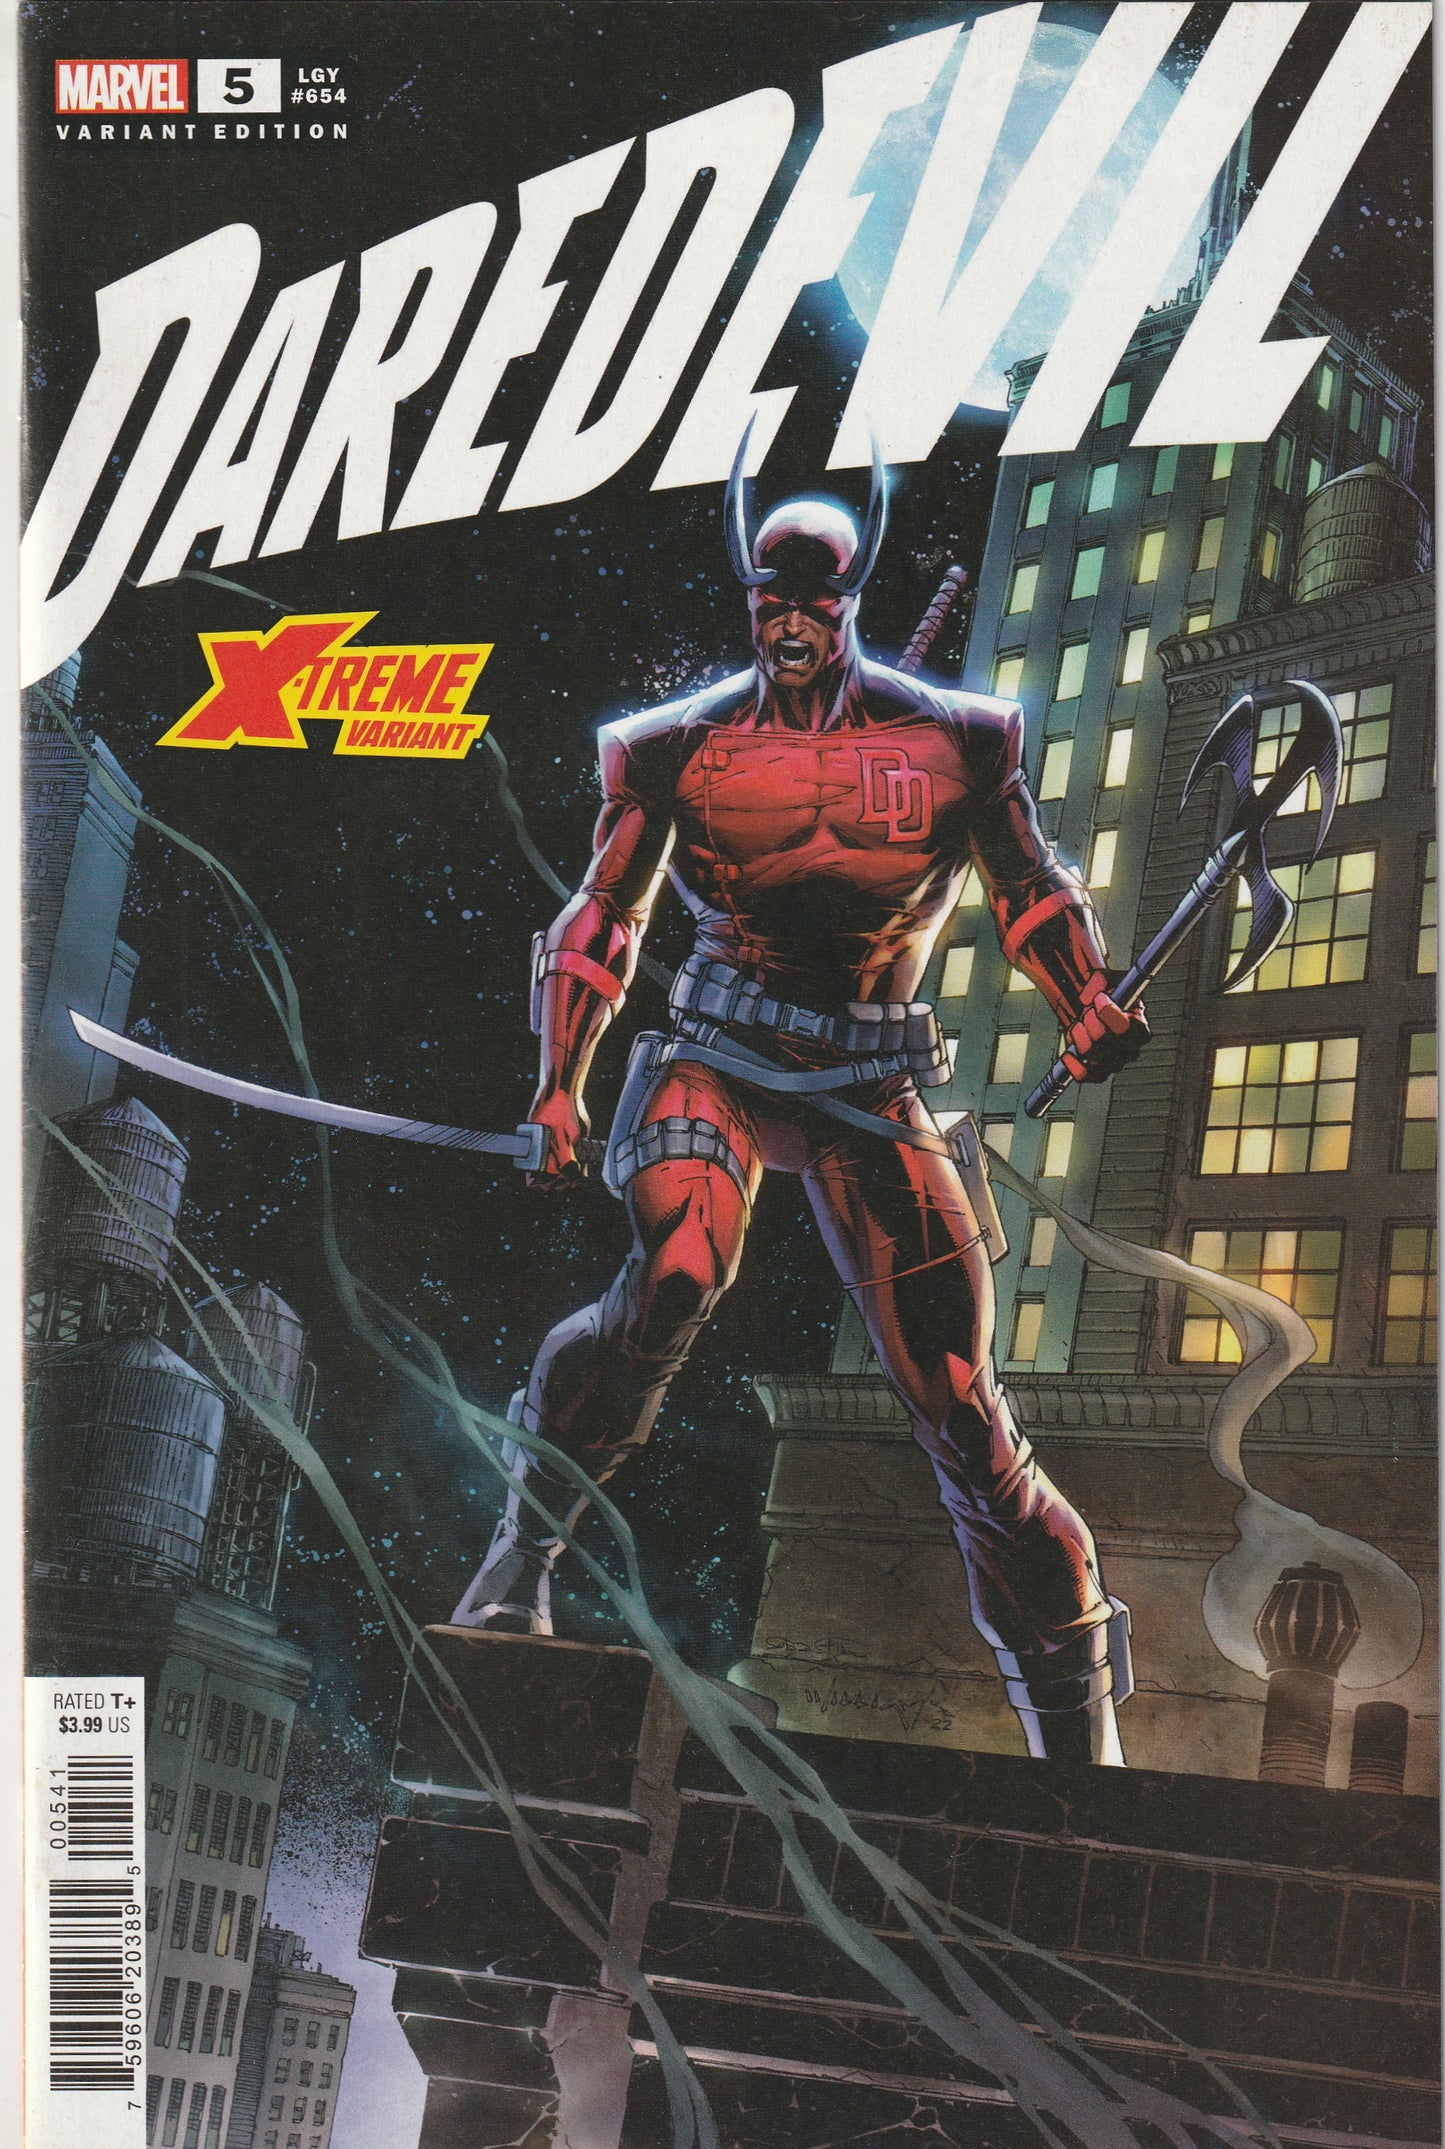 Daredevil #5 (LGY #654) (2023) - Scott Williams X-Treme Marvel Variant